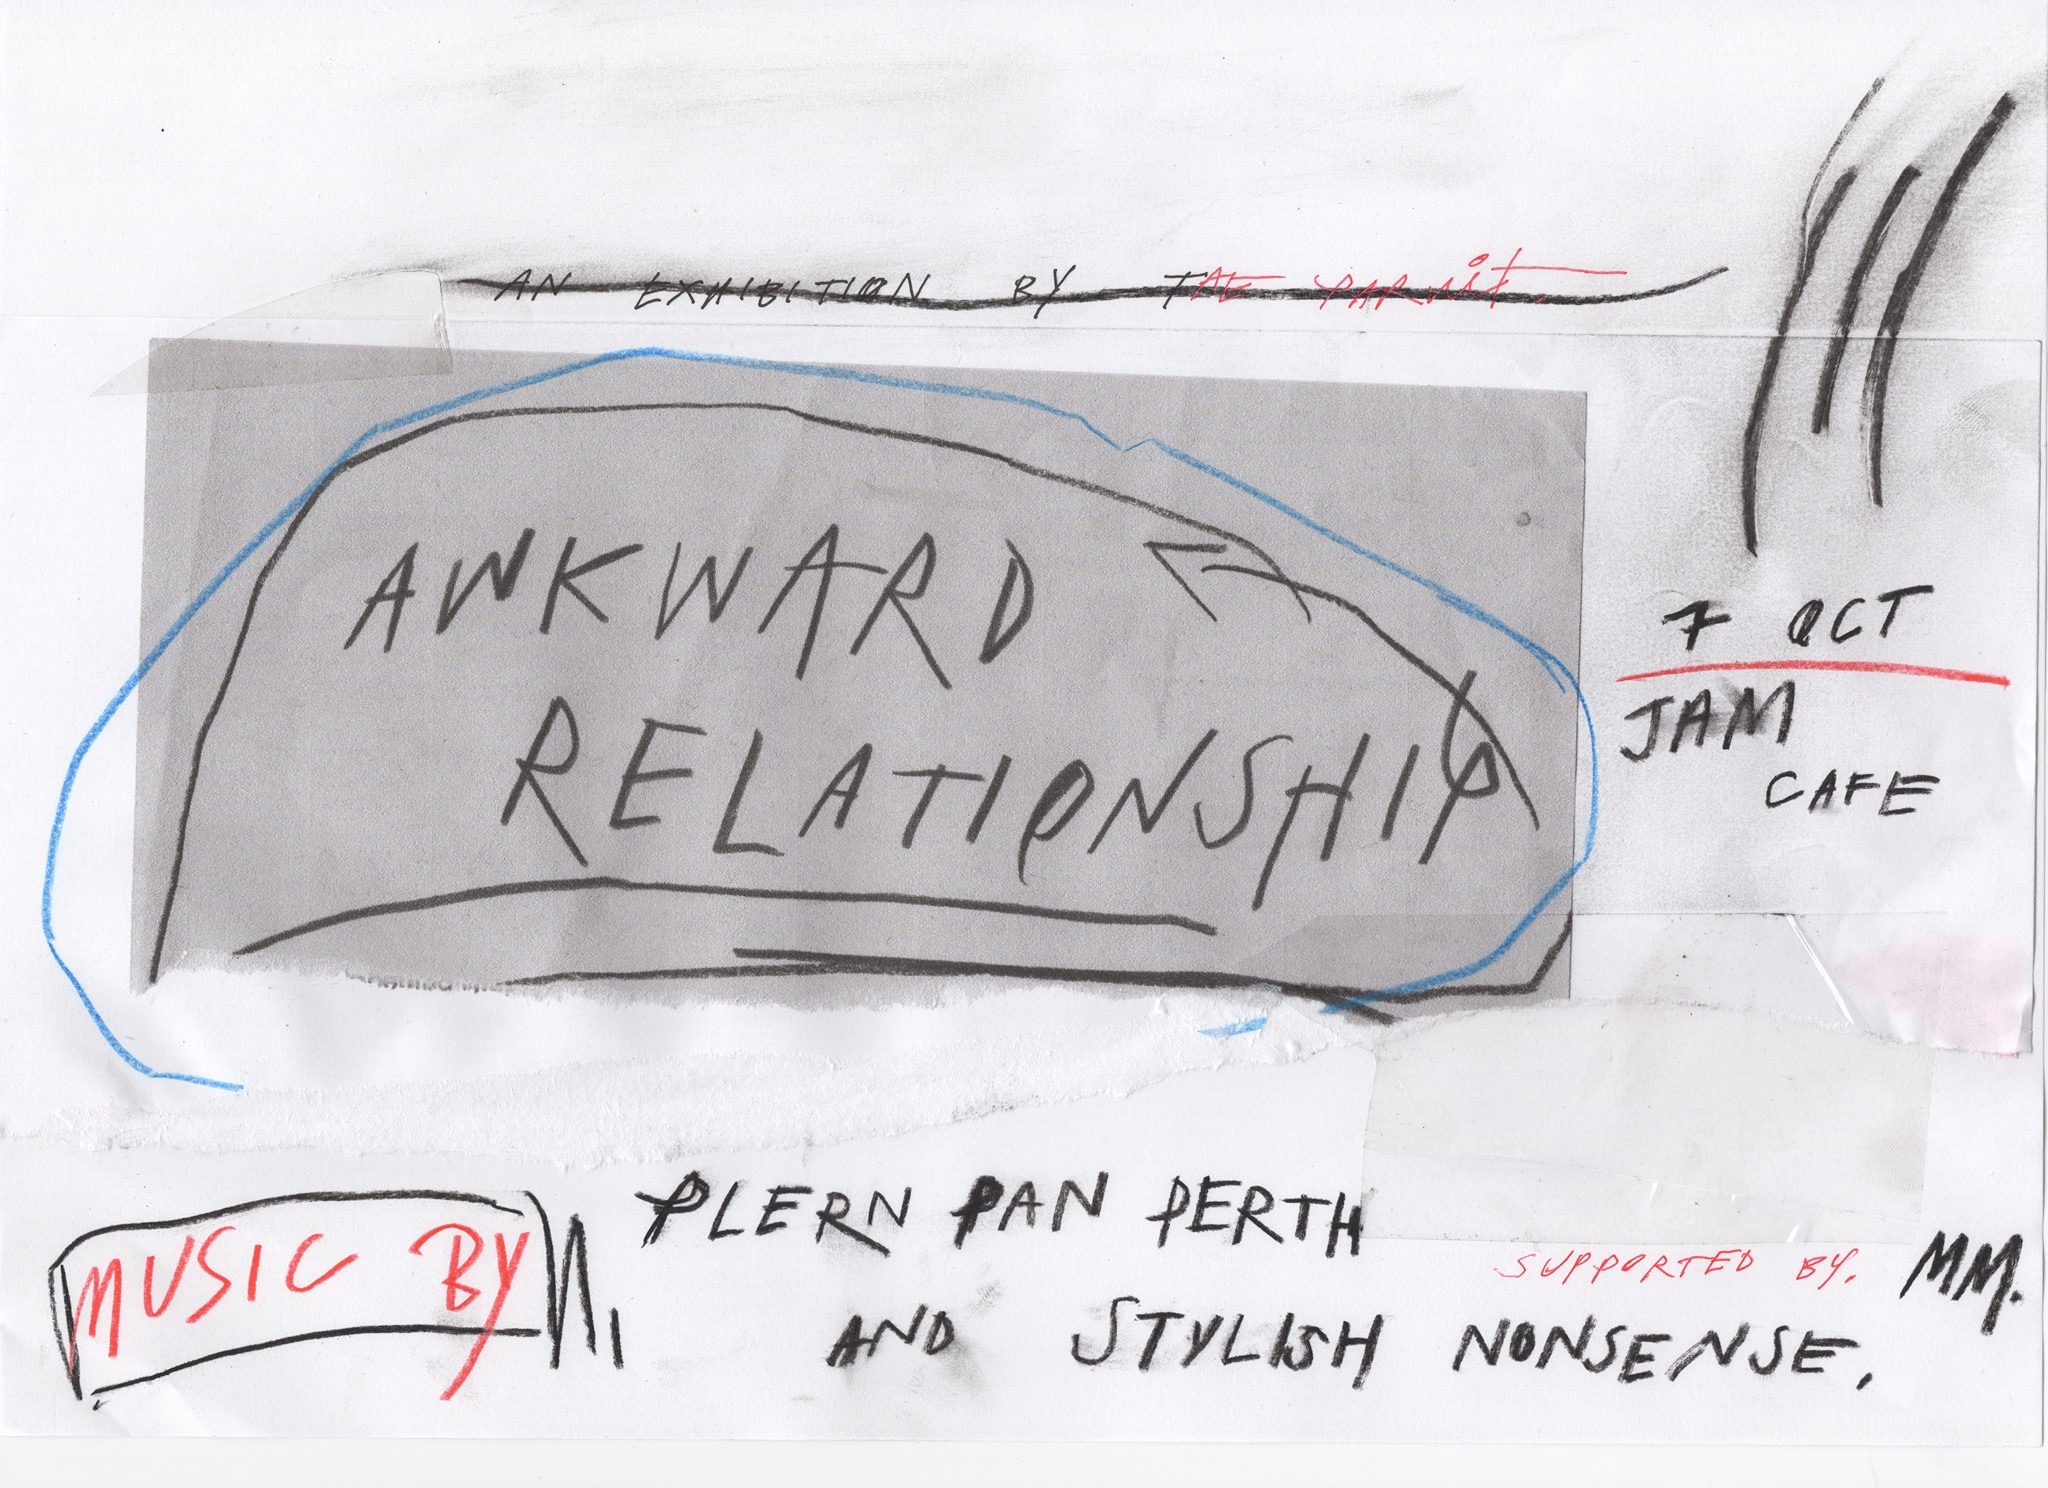 Awkward Relationship - Exhibition of Tae Parvit